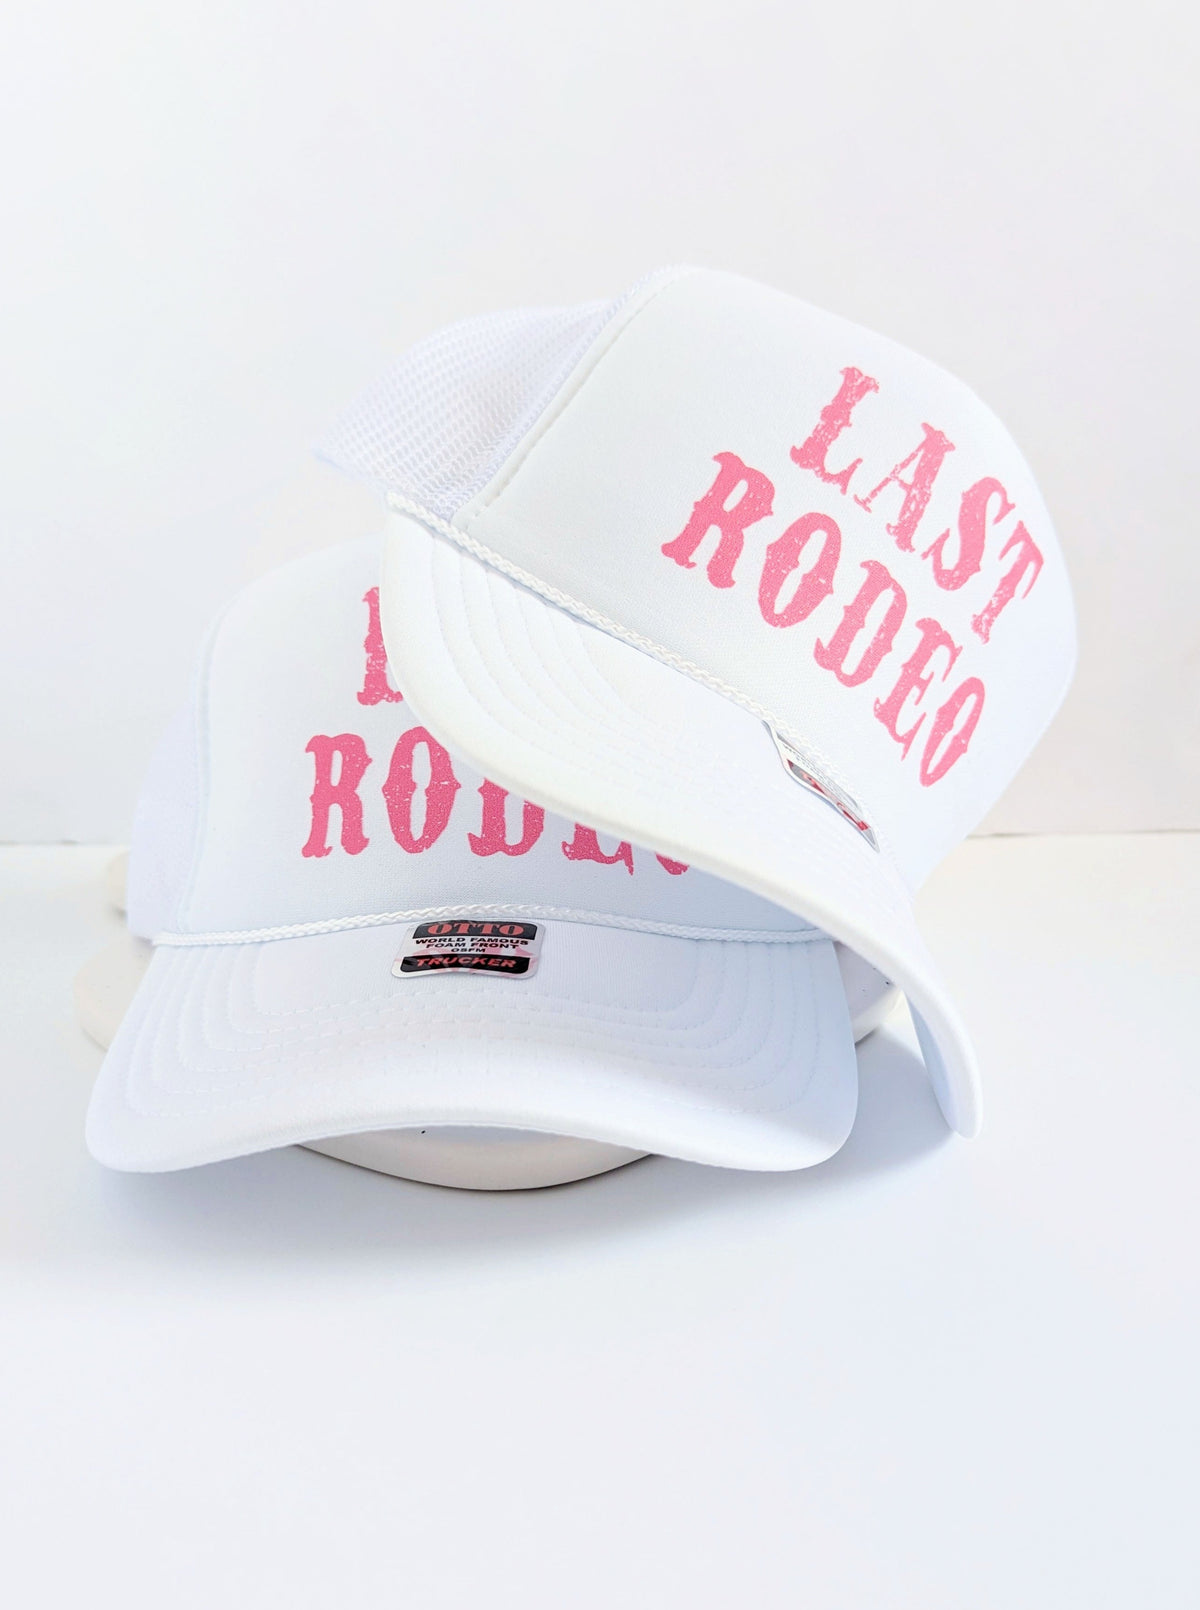 Last Rodeo Trucker Hat | White